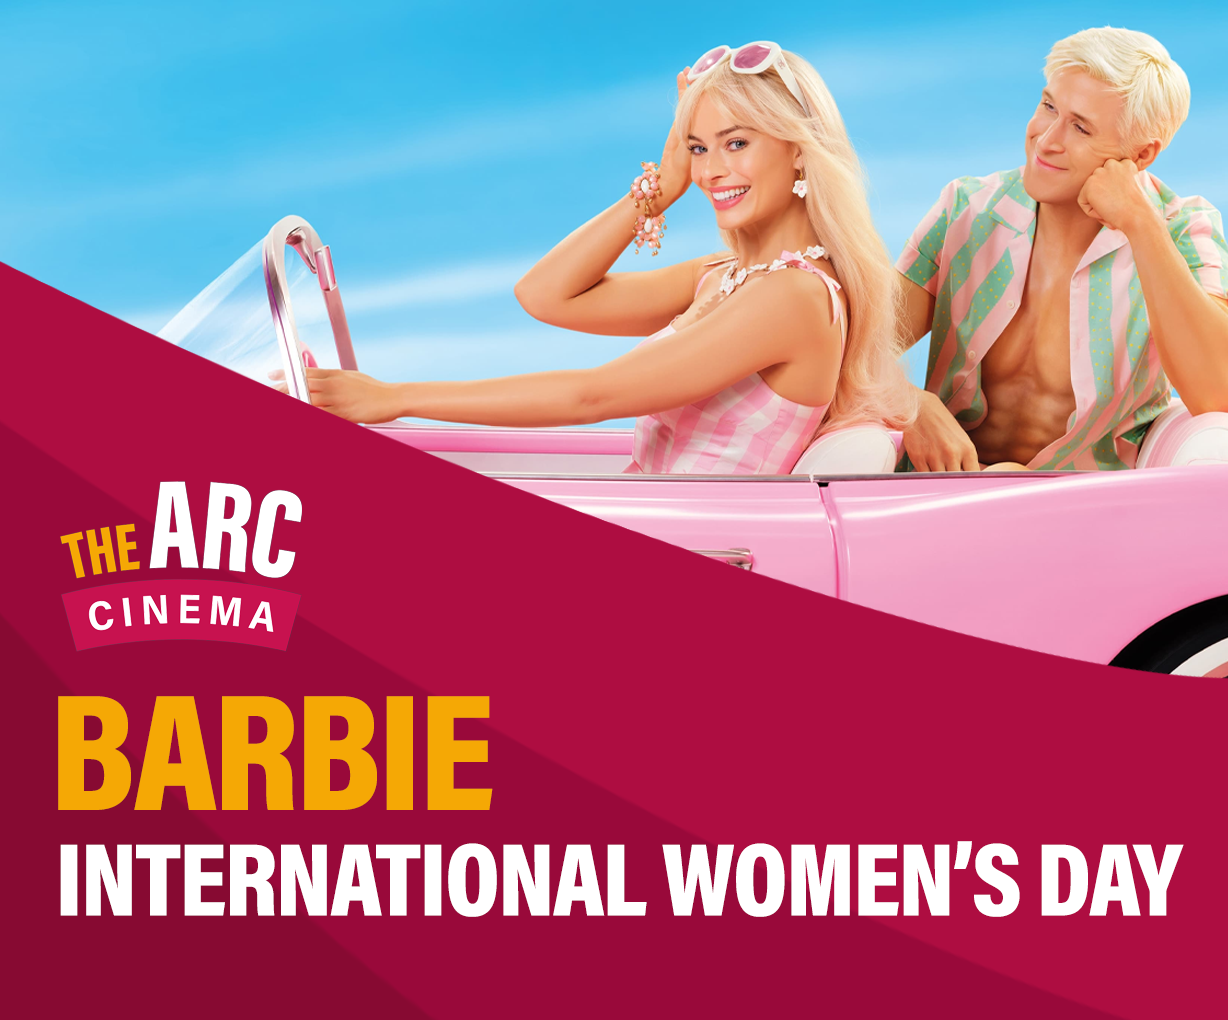 BARBIE: INTERNATIONAL WOMEN'S DAY